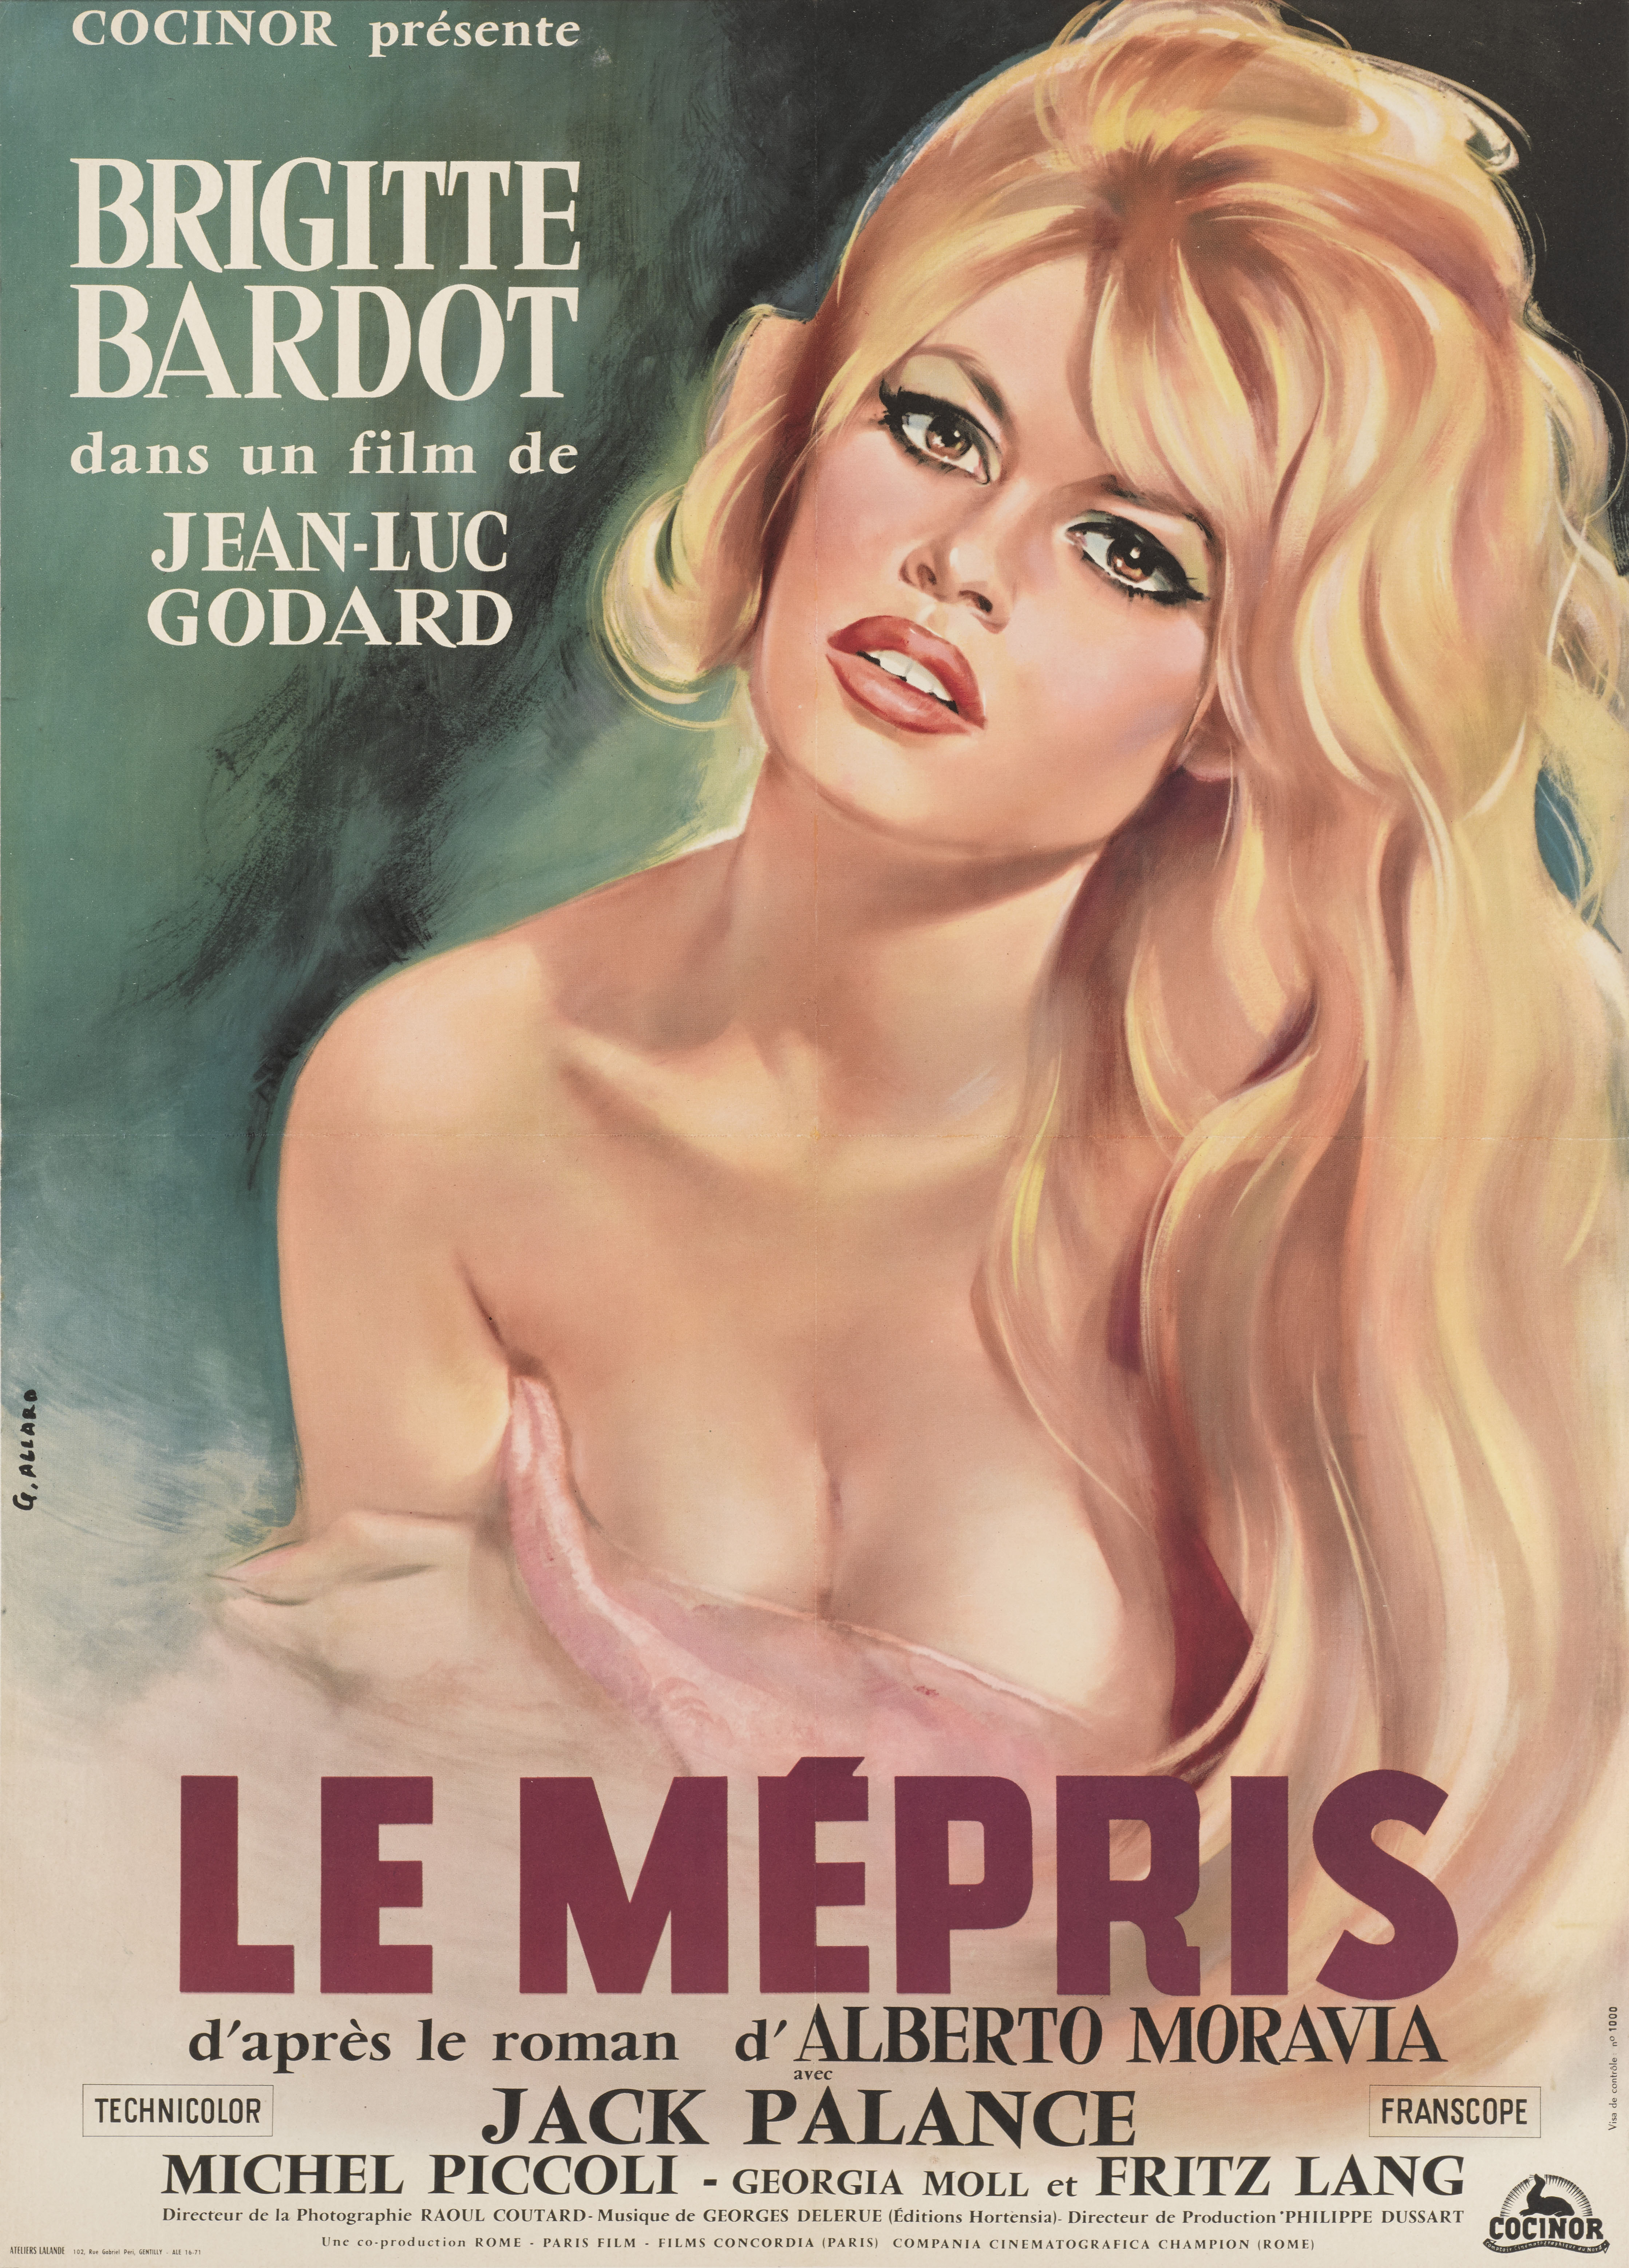 Le Mepris / Contempt (1963) Original French poster Artist: Georges Allard (dates unknown)Unframed: 3